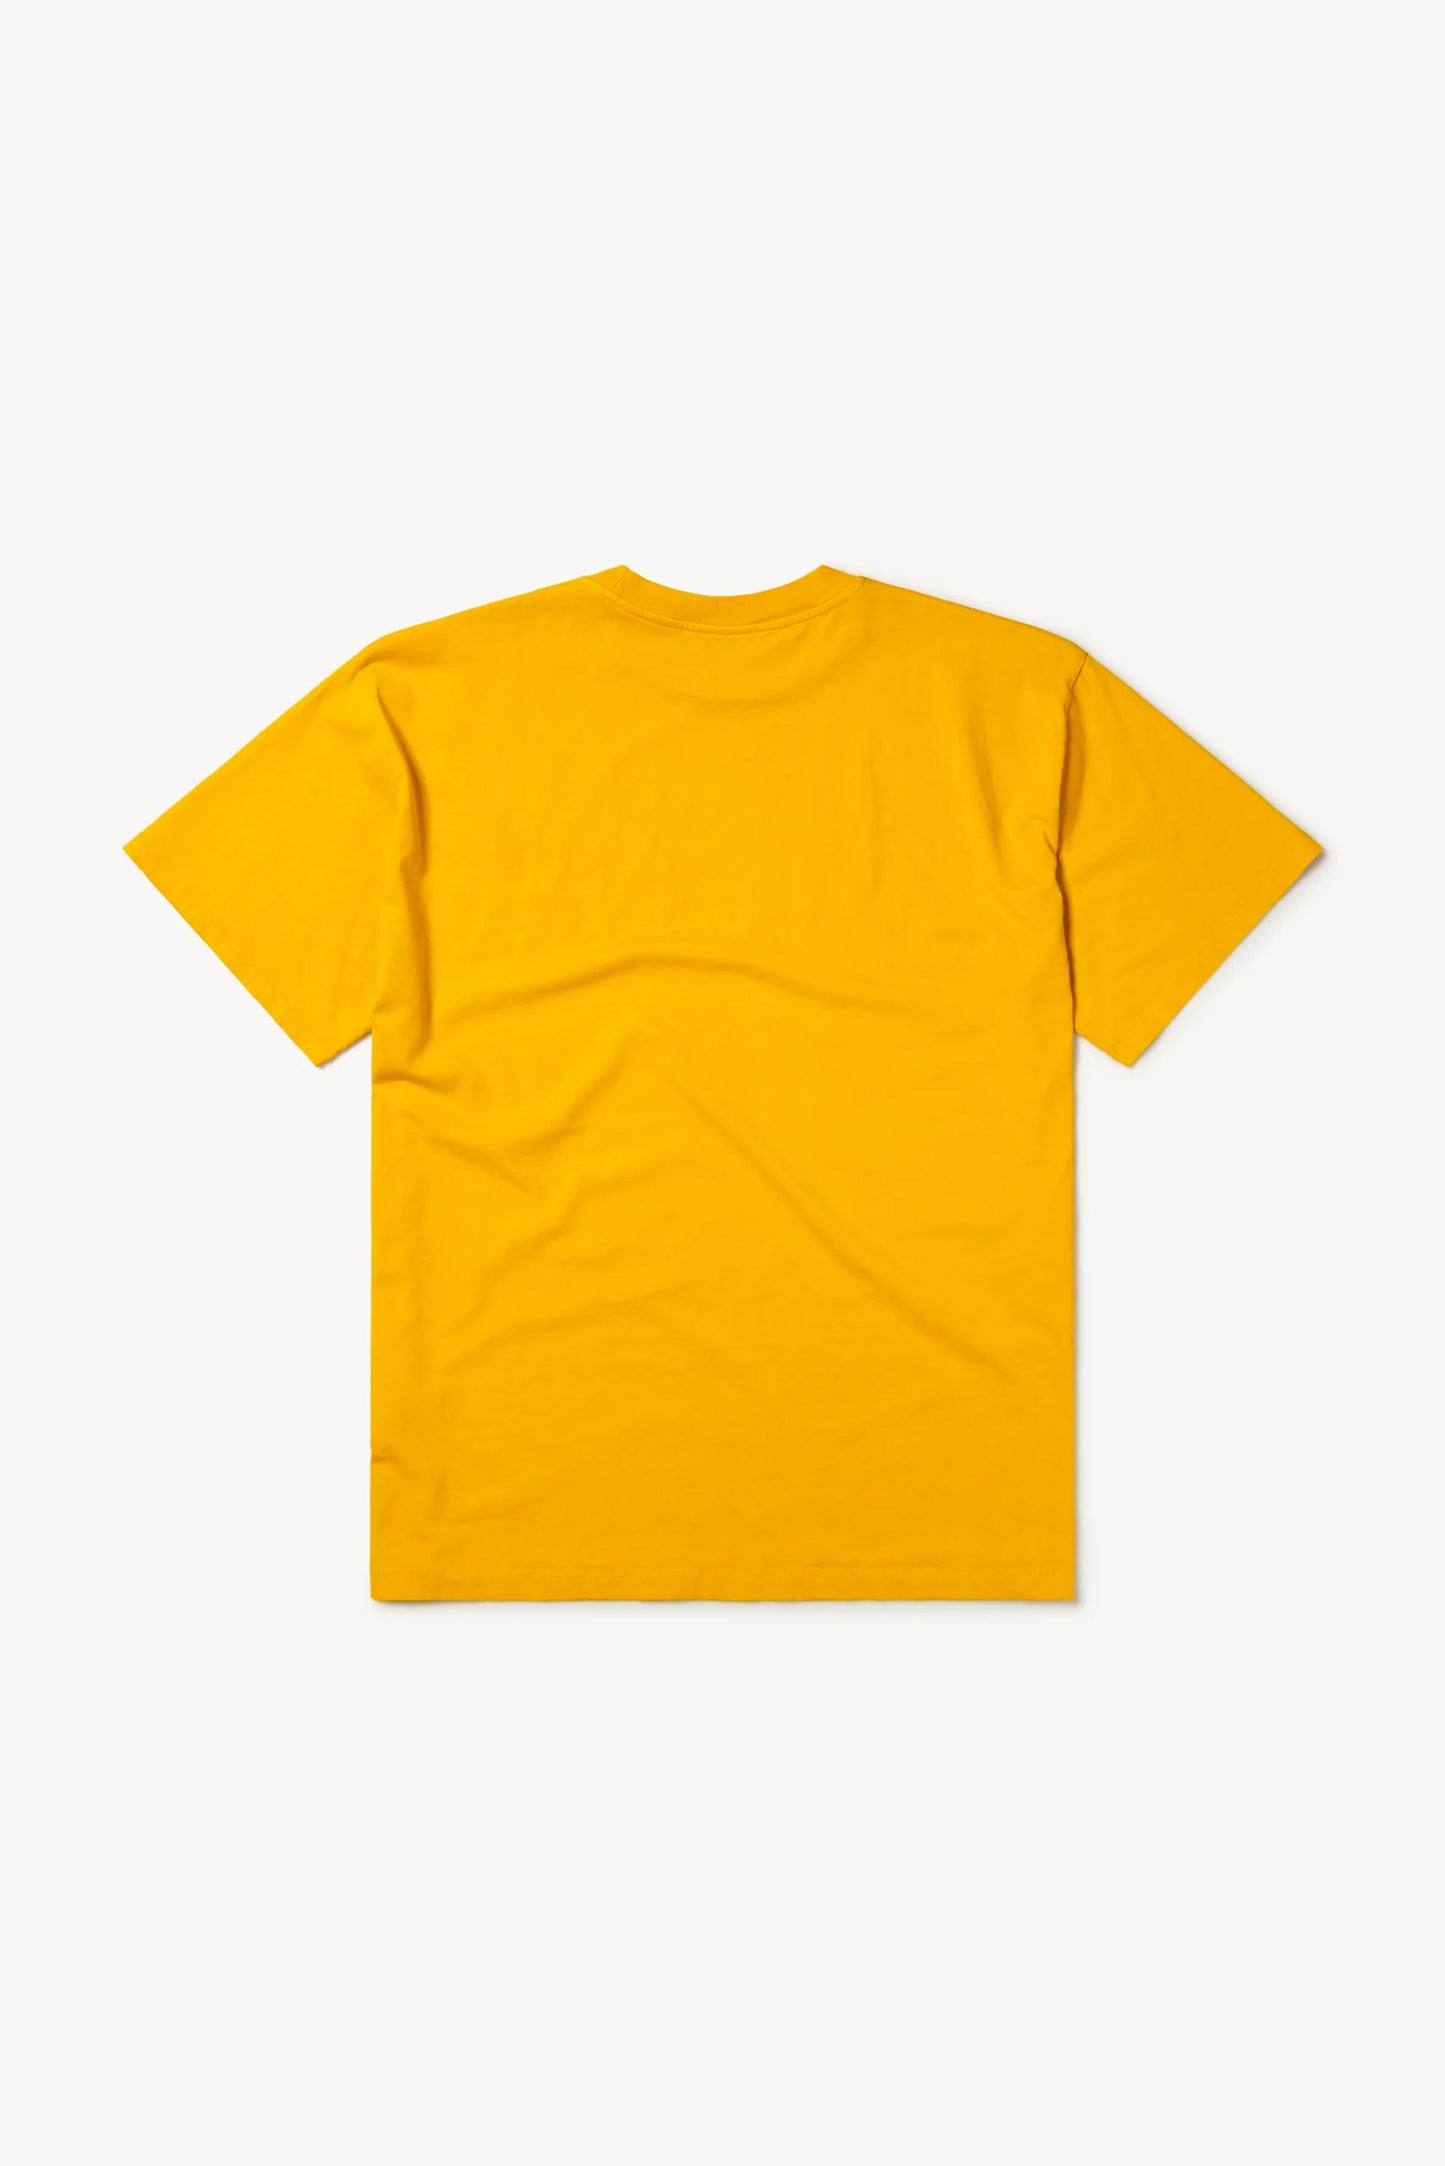 No Problemo, Mustard, T-Shirt